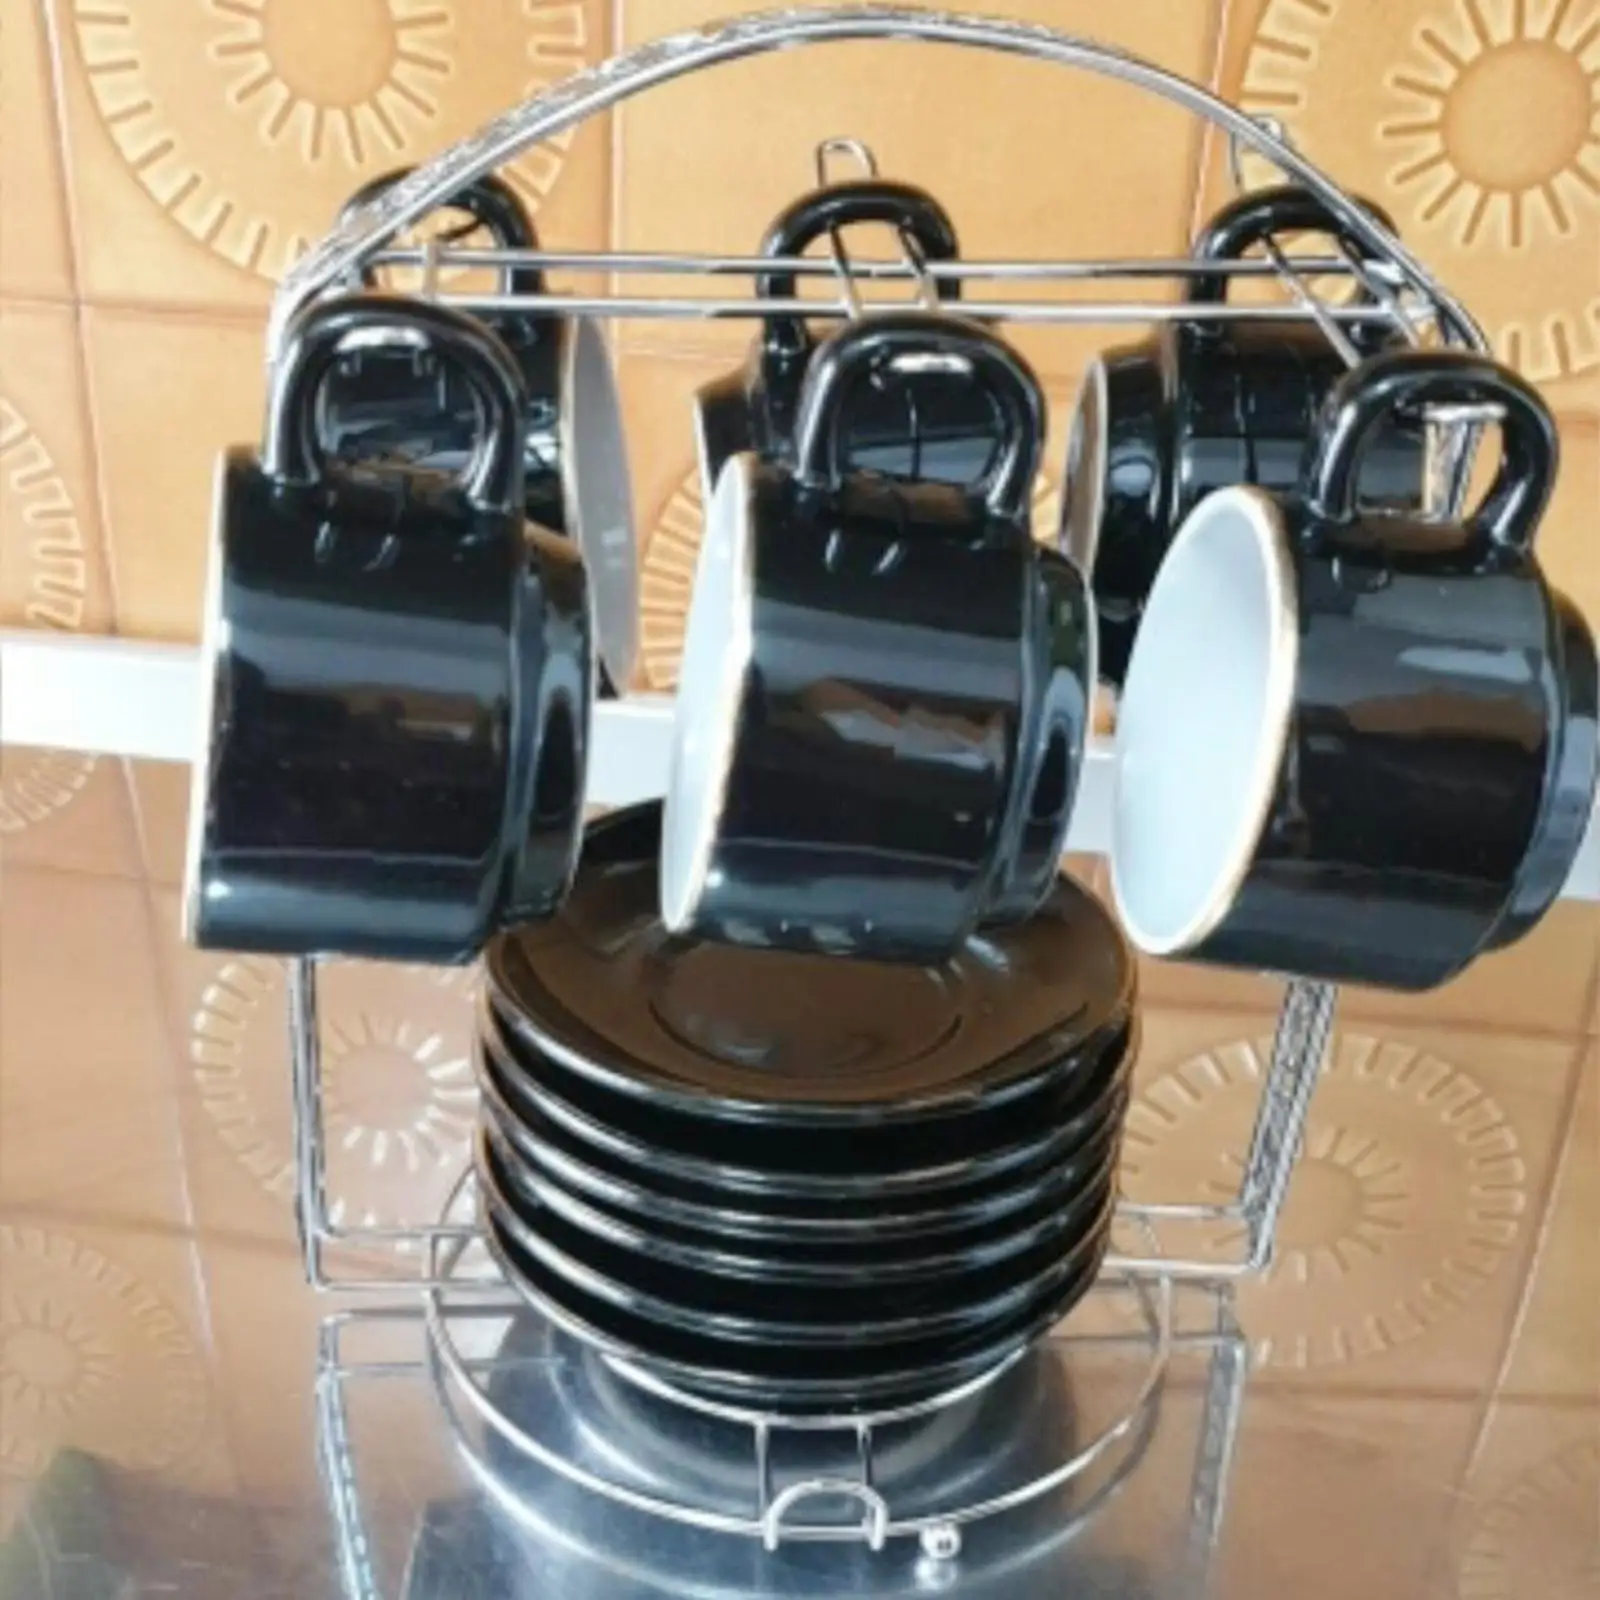 Cup Rack Display Stand Drinkware Storage Organizer Mug Holder Cup Hob Coffee Mug Holder for Kitchen Tabletop Counter Home